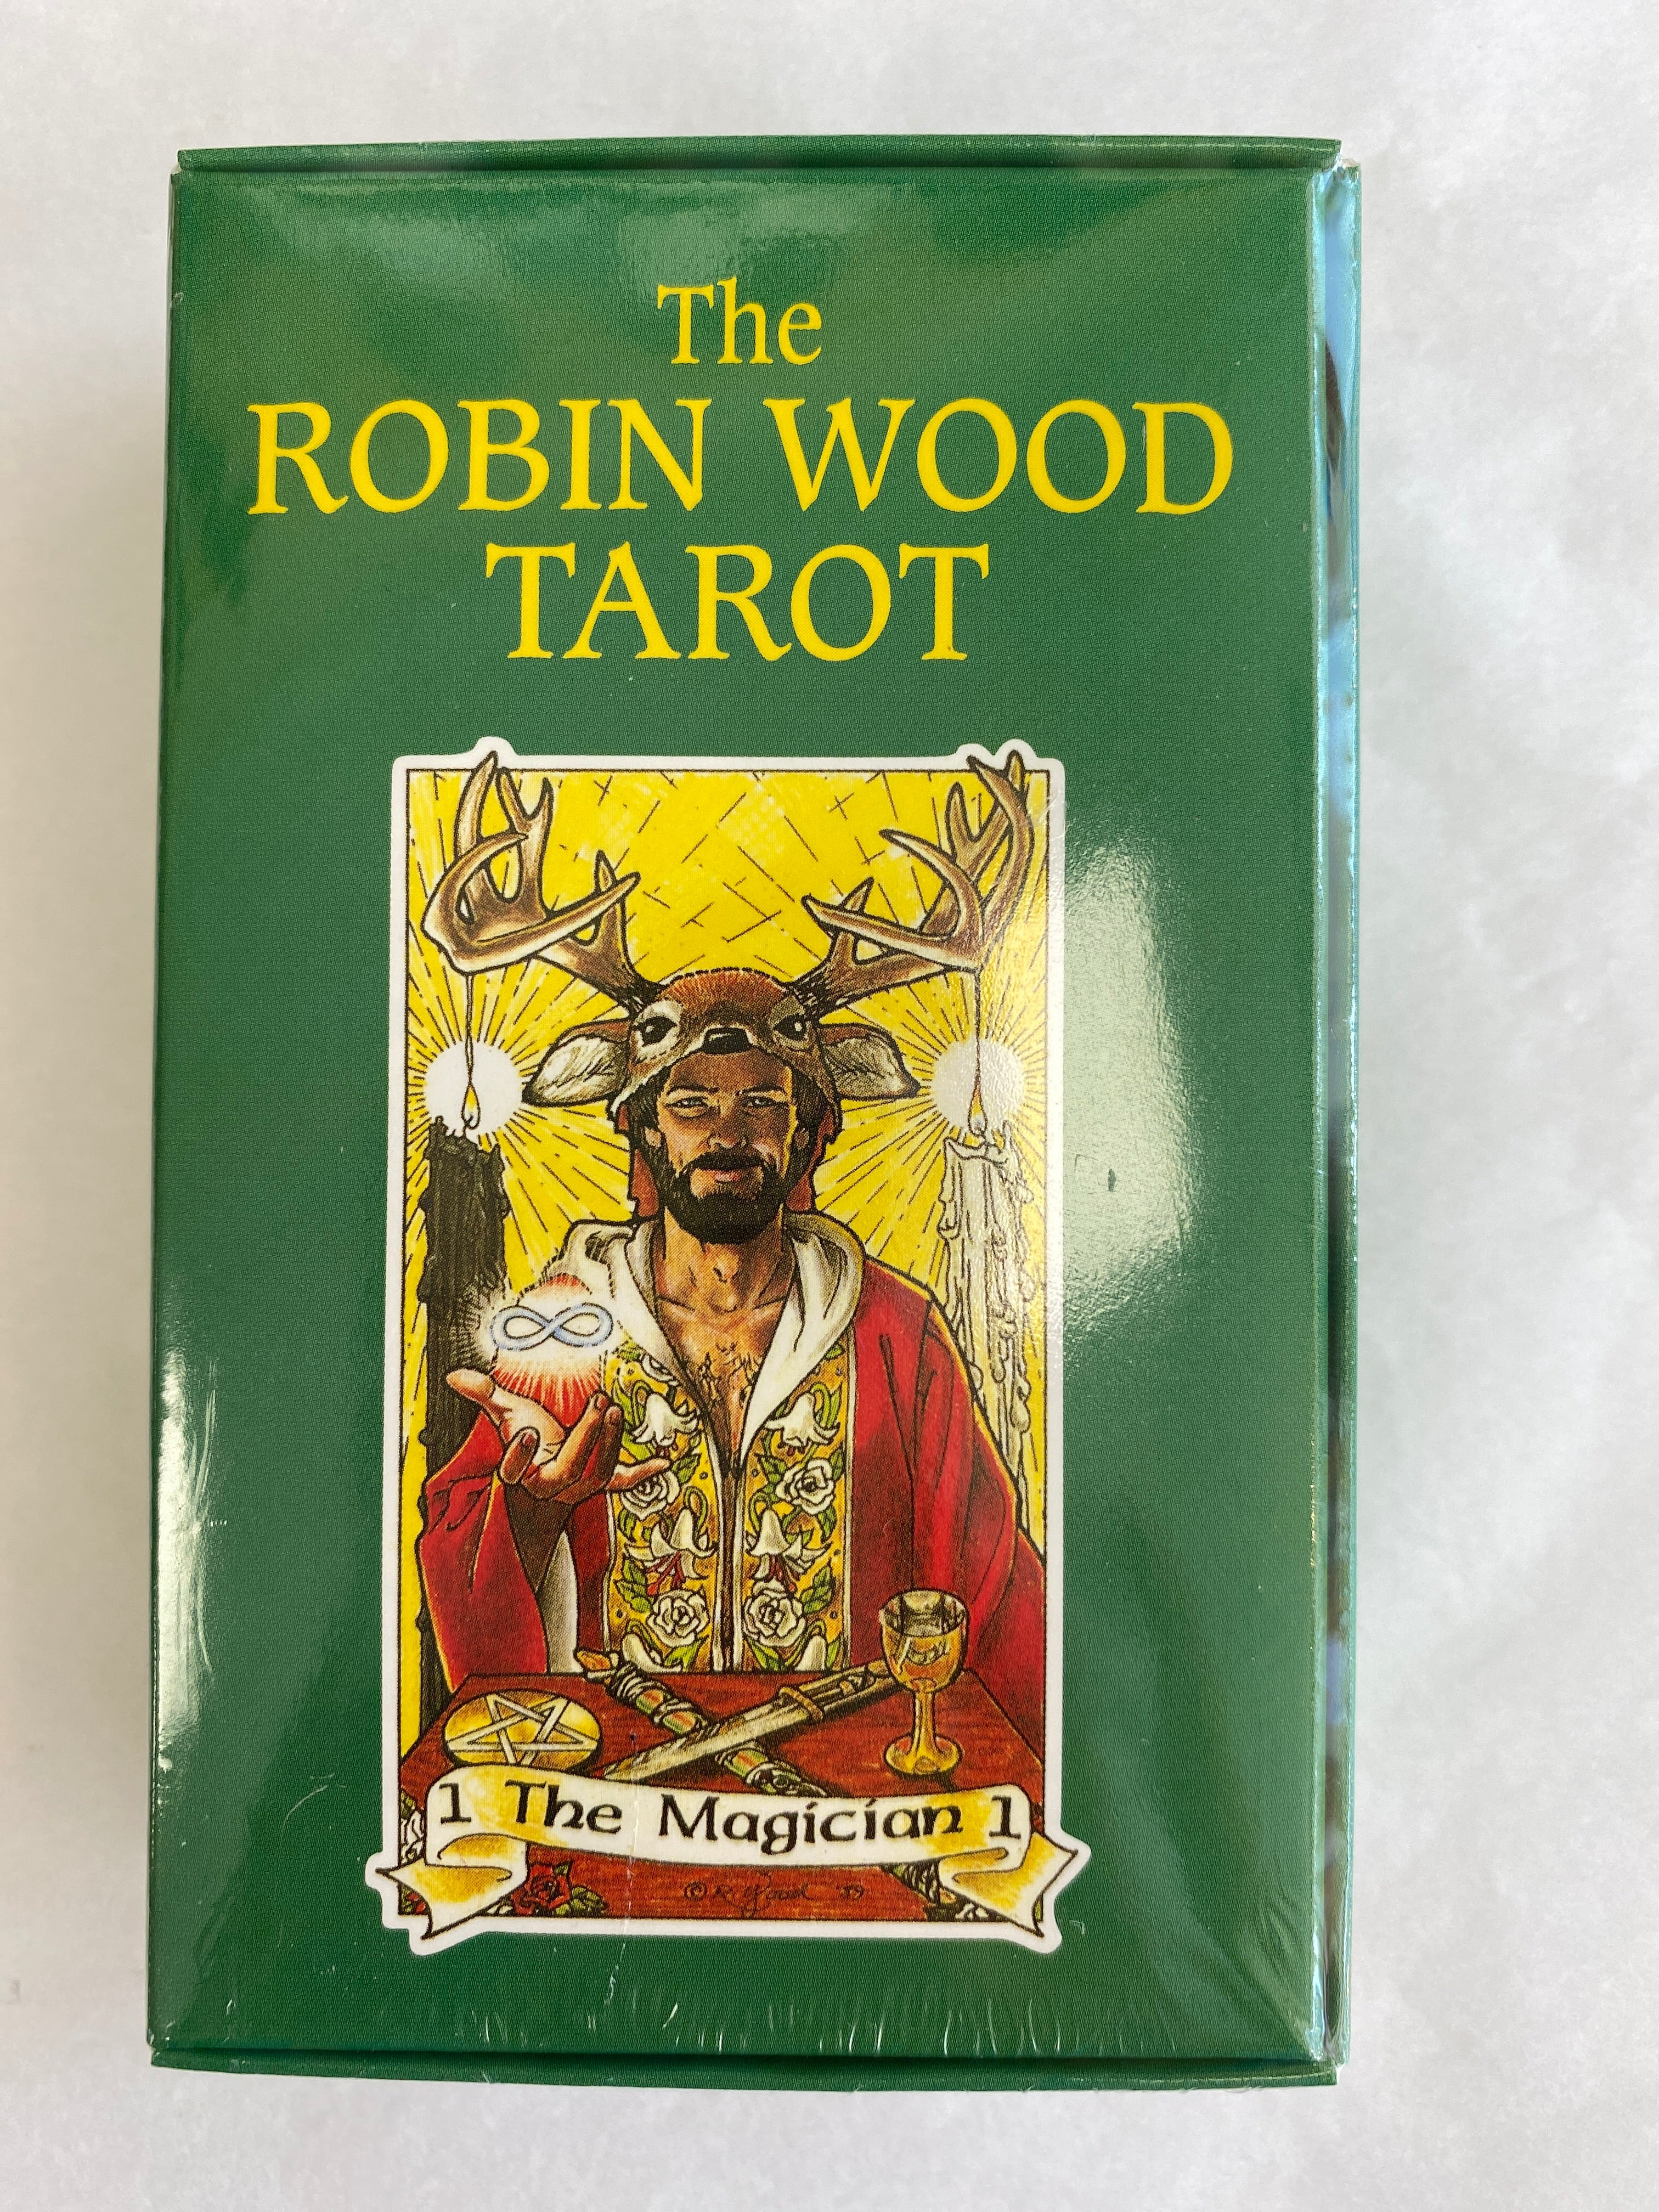 The Robin Wood Tarot Deck